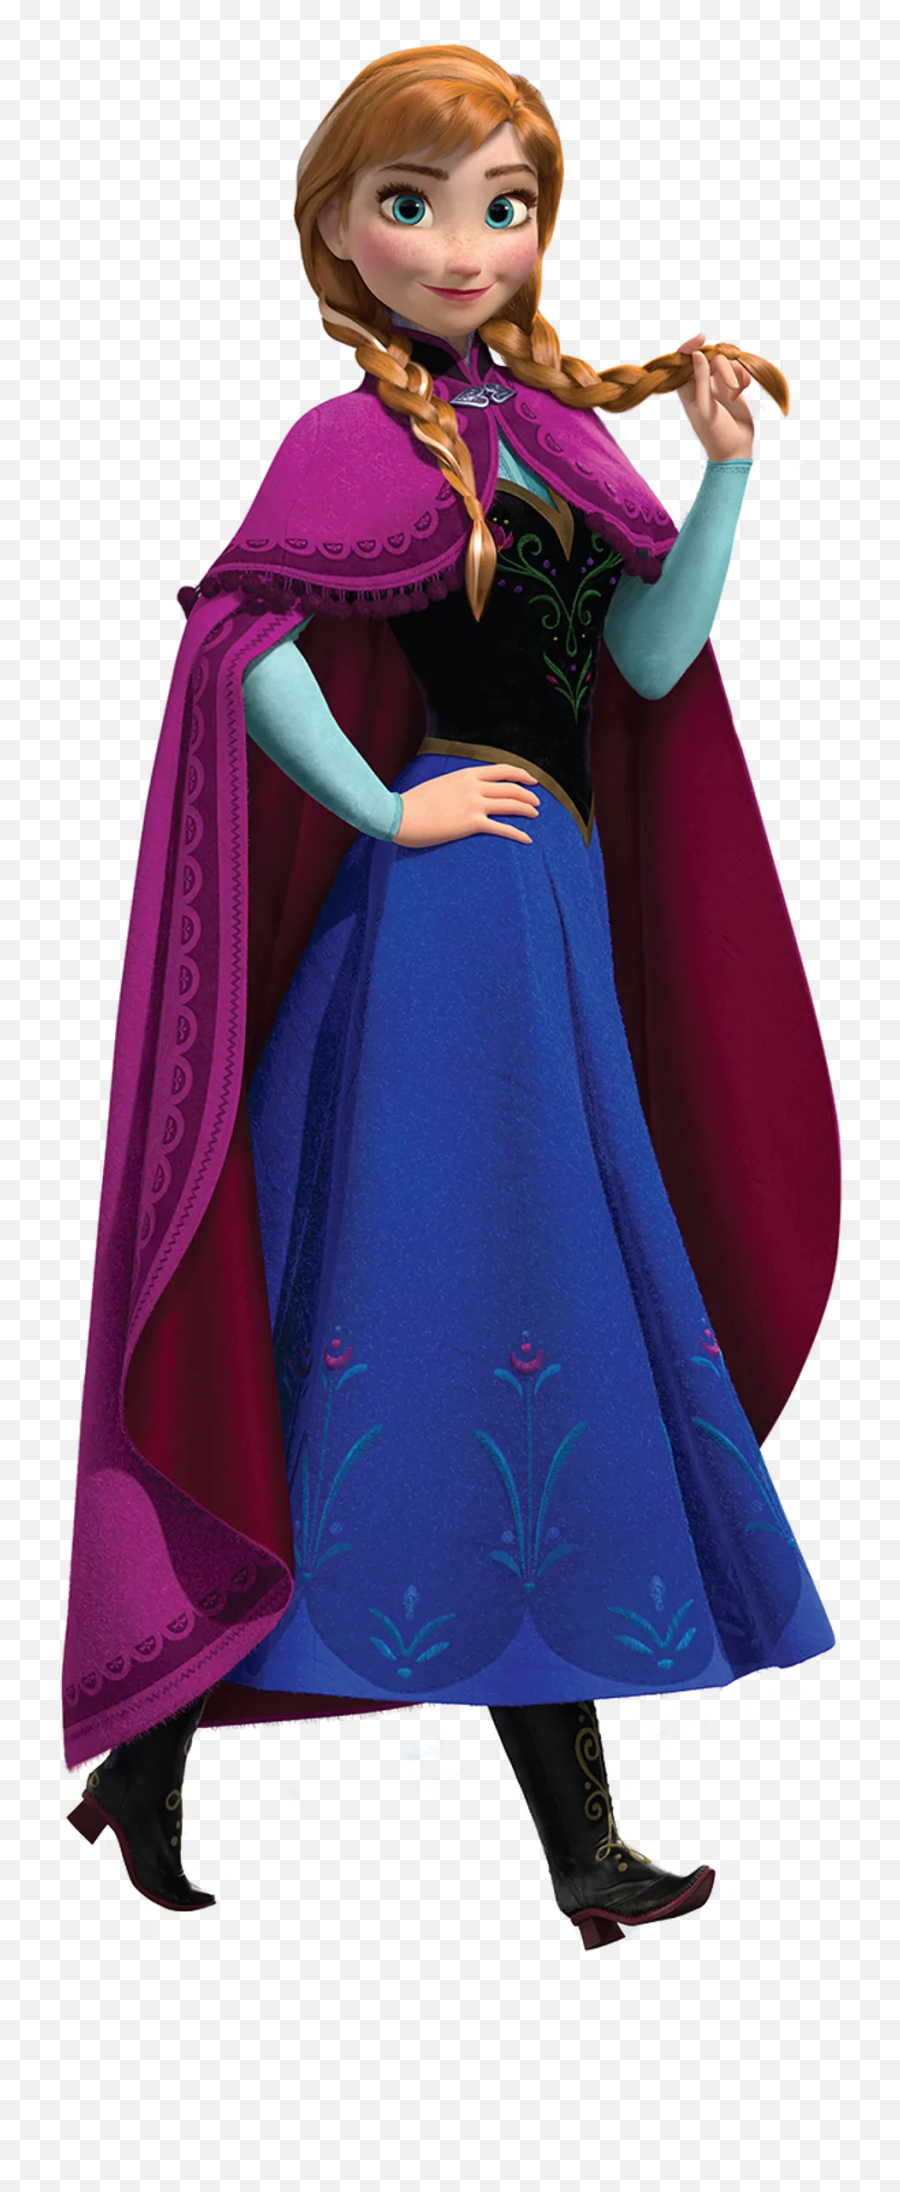 If Disney Princesses Enrolled In Sec Schools - Princess Disney Frozen Anna Emoji,Sexy Princess Adult Emojis With Necklace